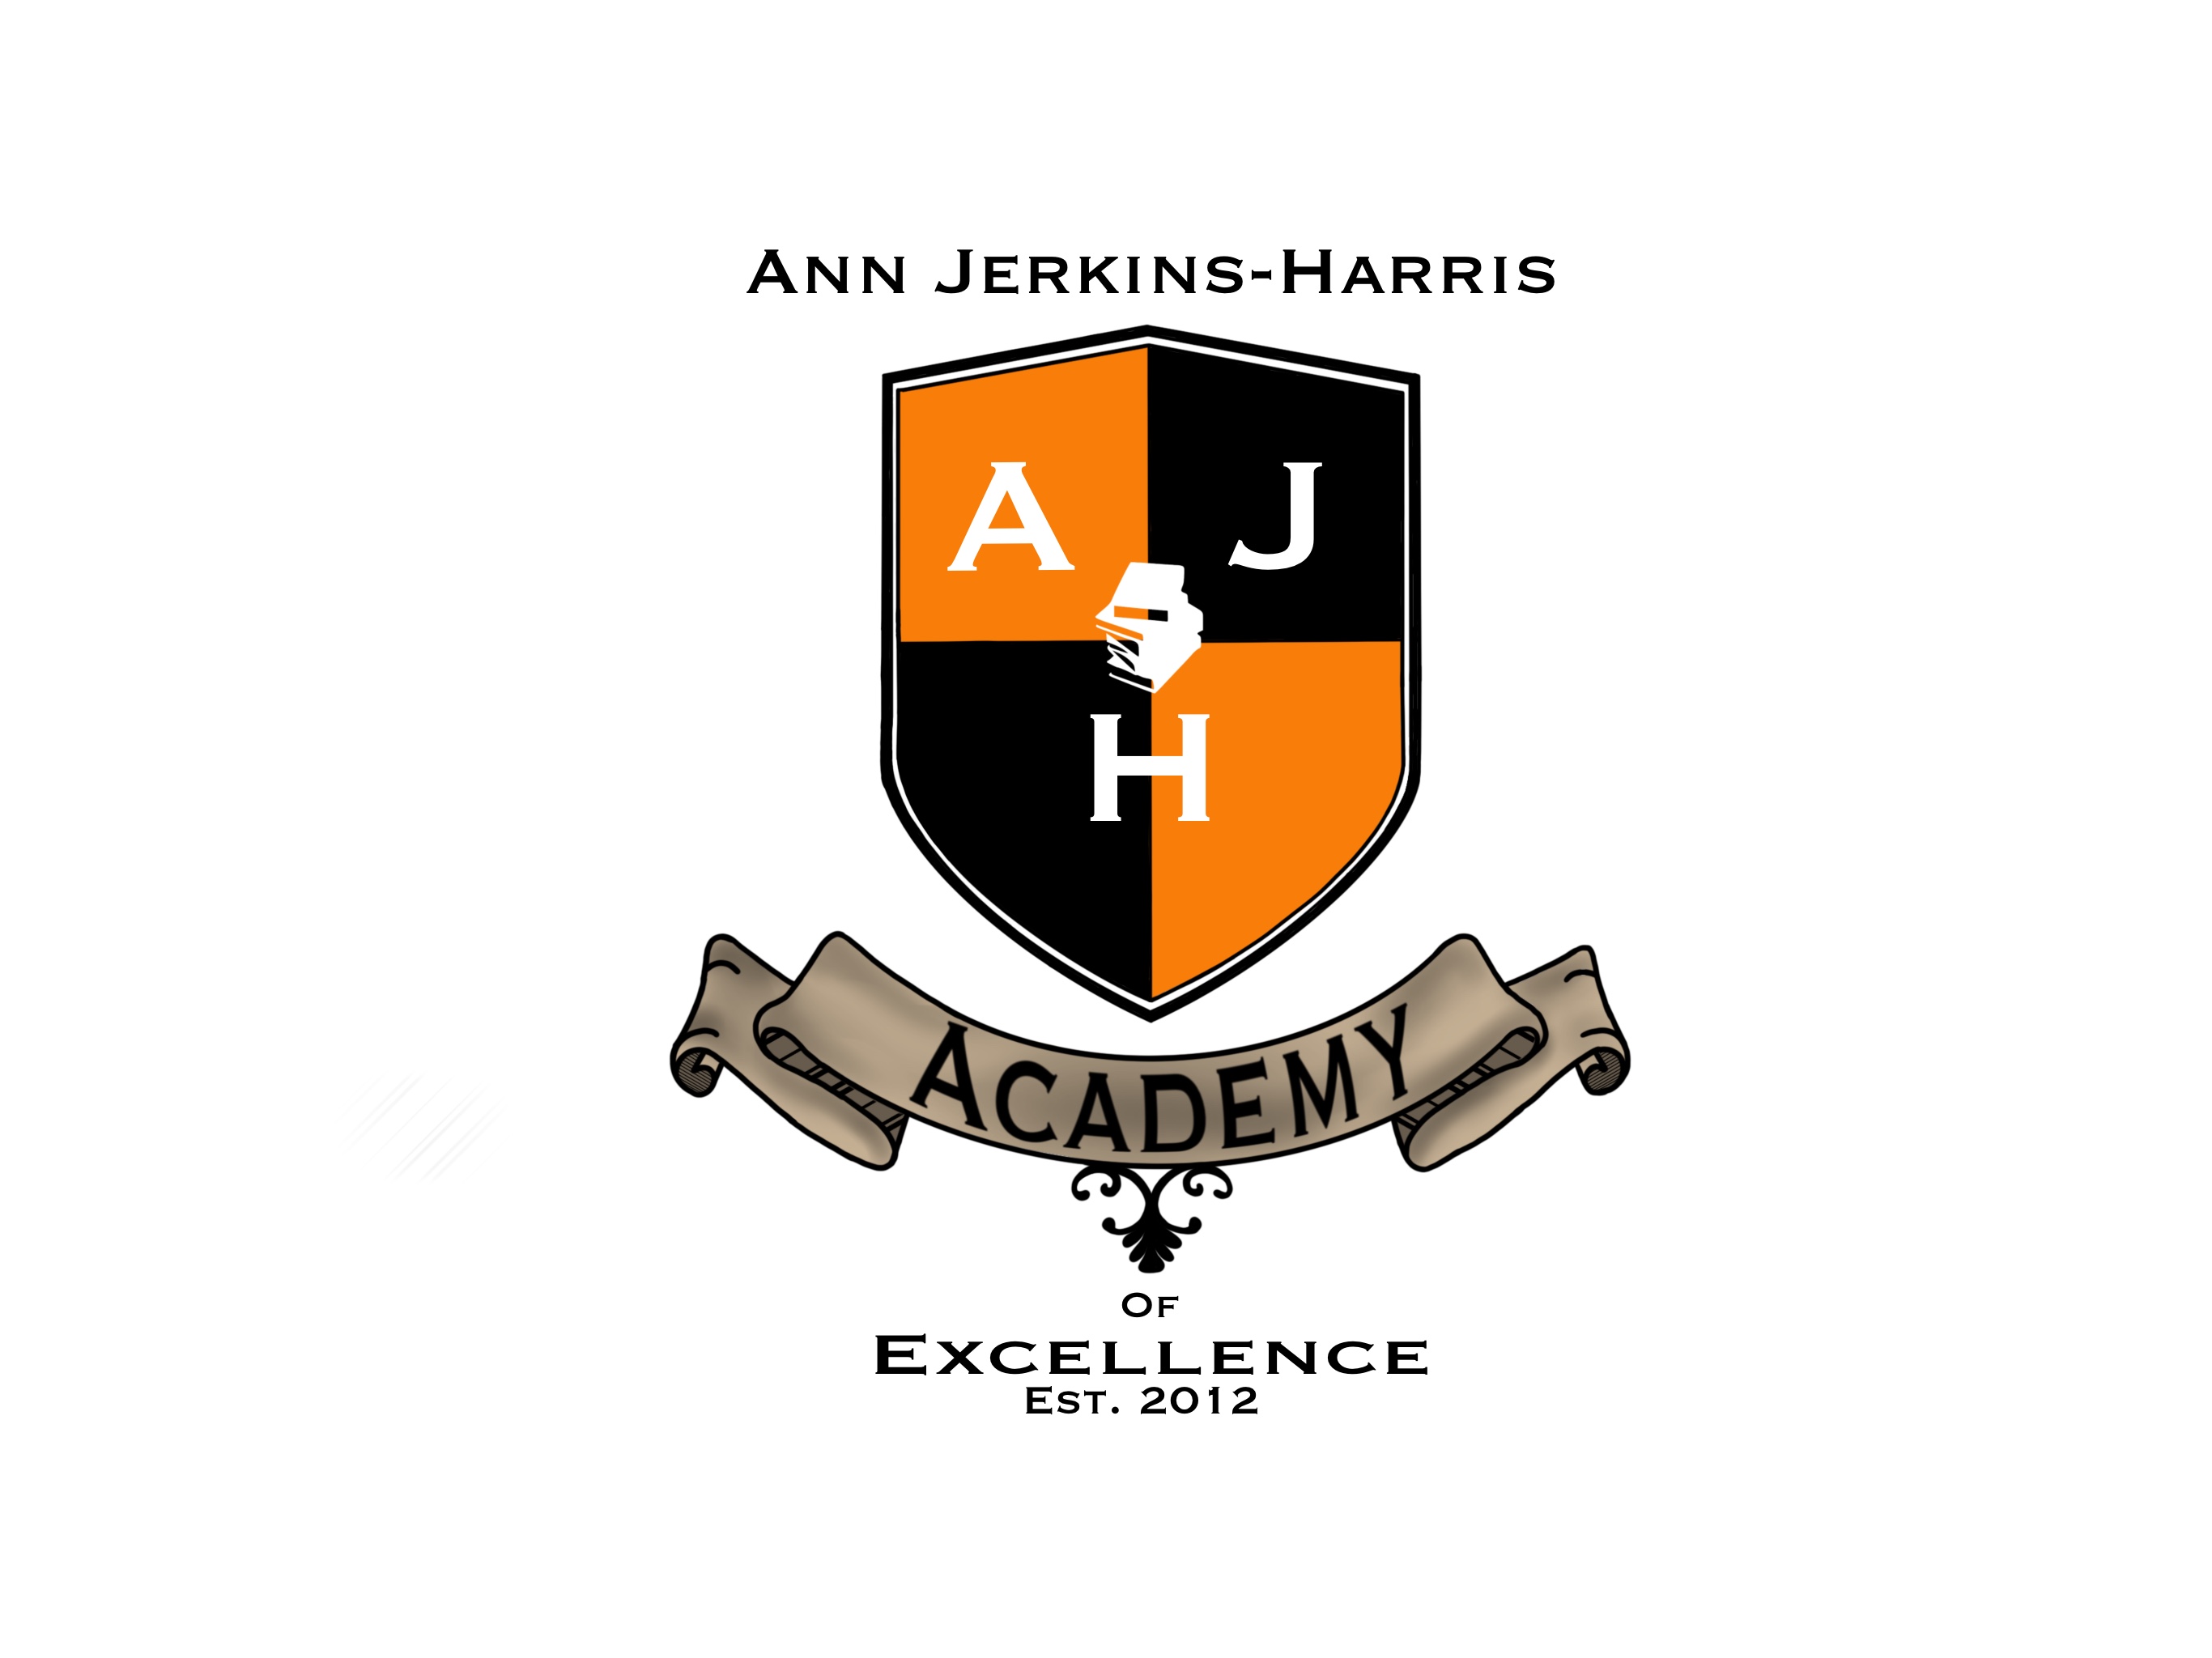 Ann Jerkins-Harris Academy of Excellence logo